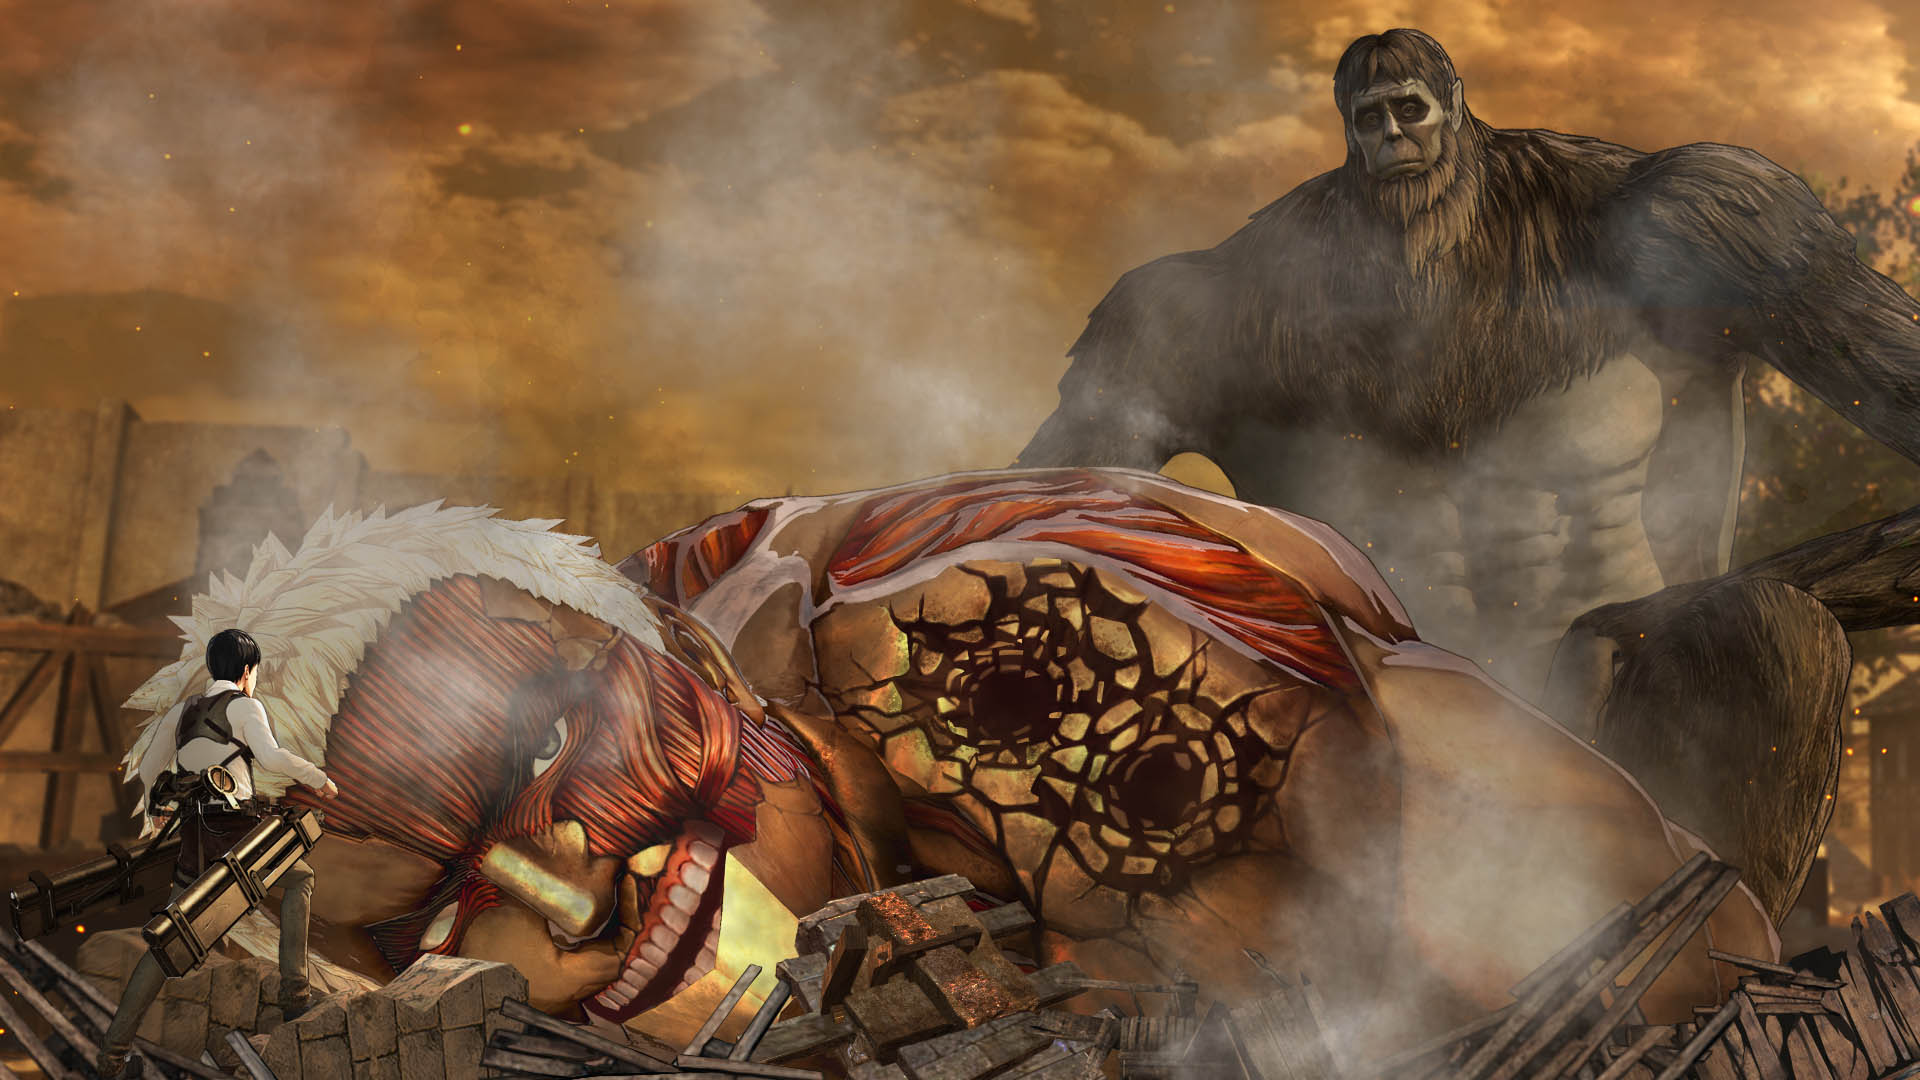 Attack on Titan 2: Final Battle Upgrade Pack / A.O.T. 2: Final Battle  Upgrade Pack / 進撃の巨人２ -Final Battle- アップグレードパック on Steam